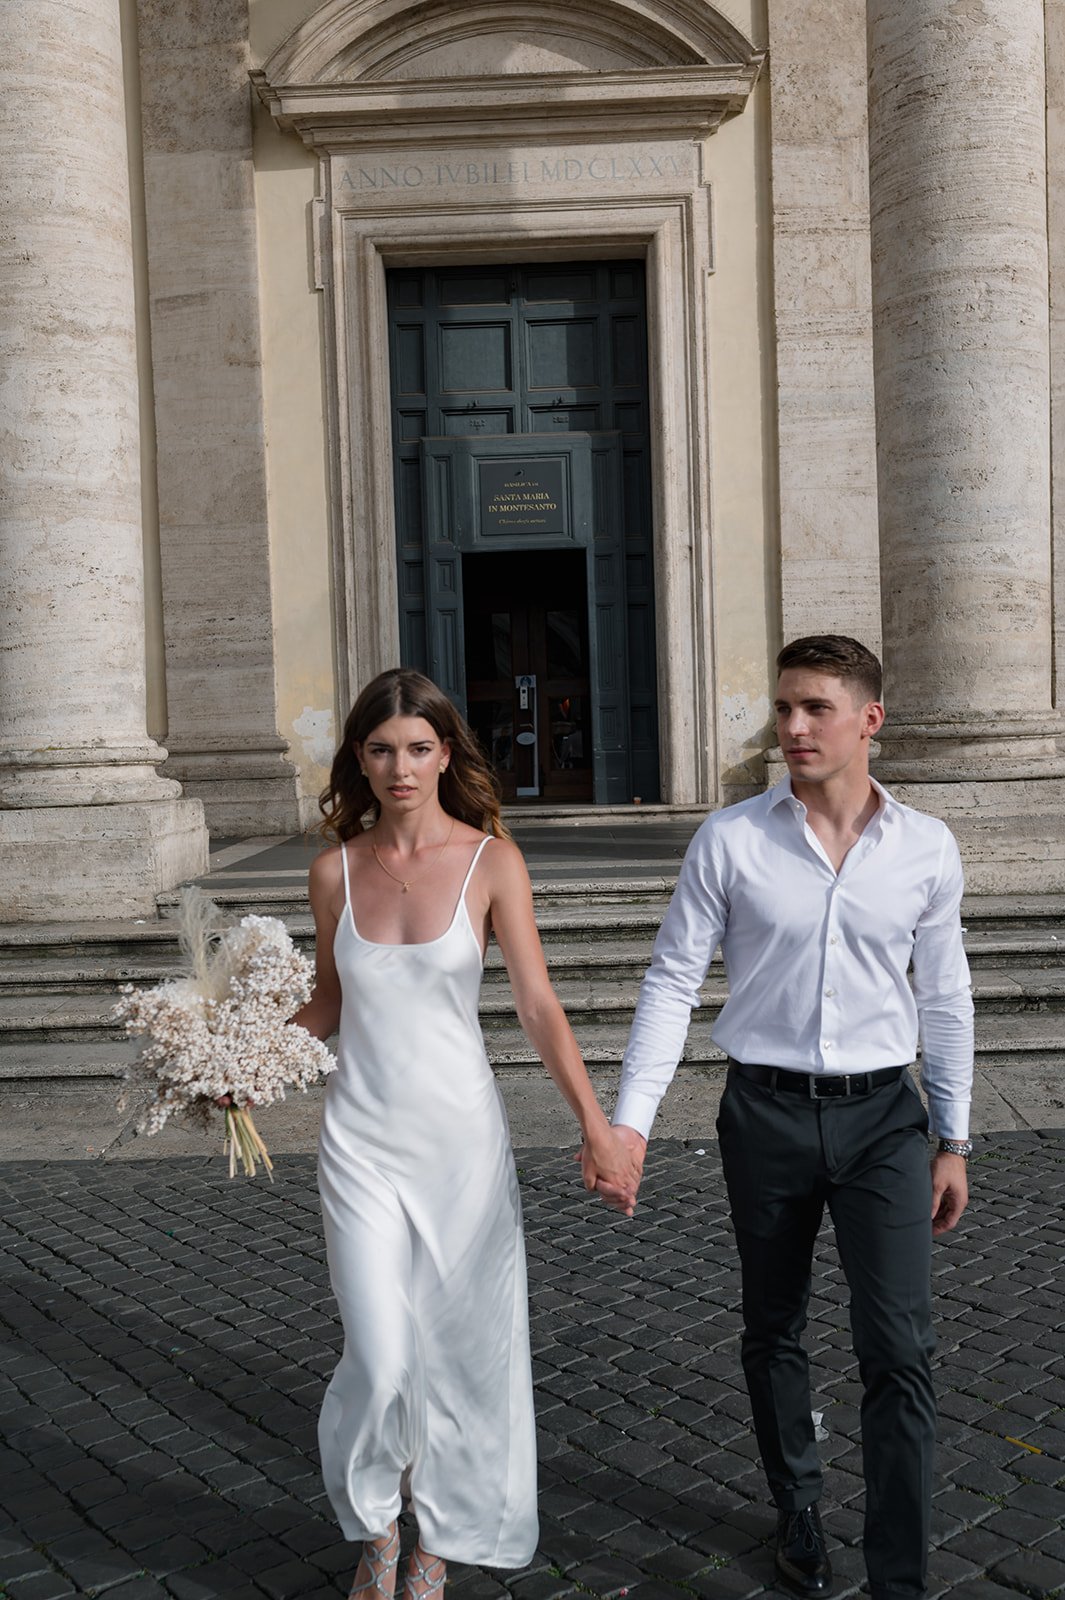 editorial style wedding photographer in rome.jpg